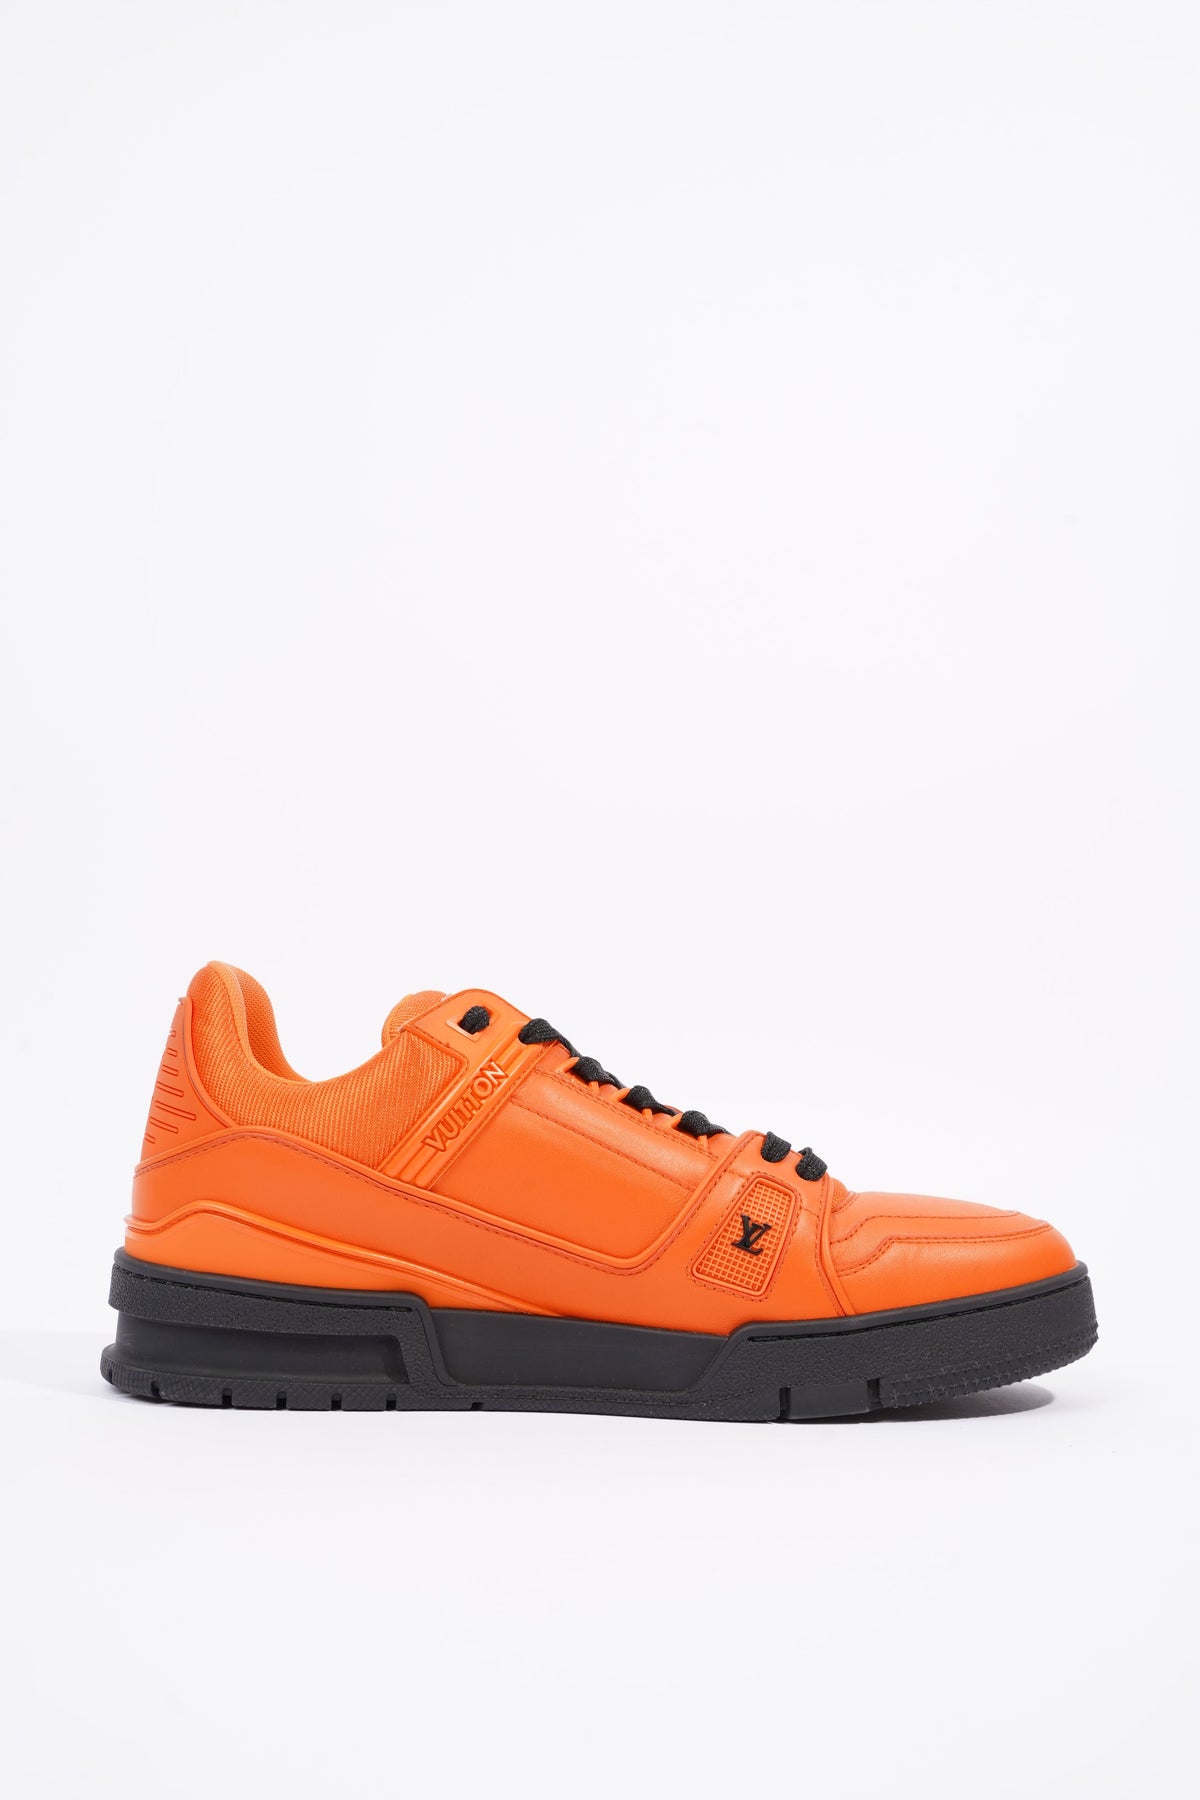 Sneakers Louis Vuitton Louis Vuitton Mens Virgil Abloh Sneaker Orange / Black EU 41 / UK 7